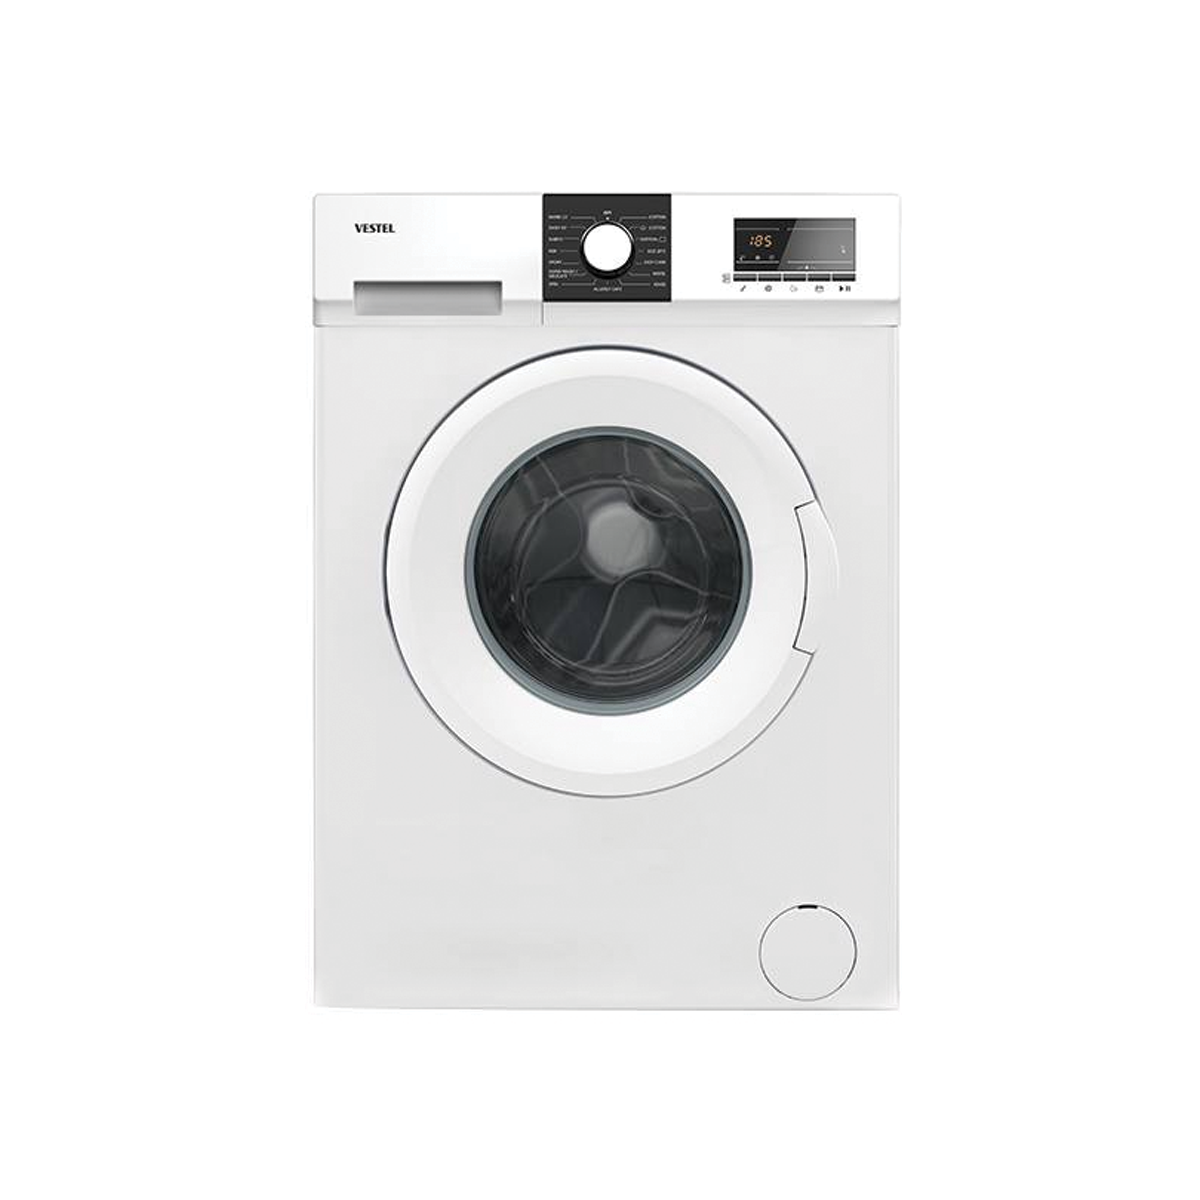 Washing Machine W 7104